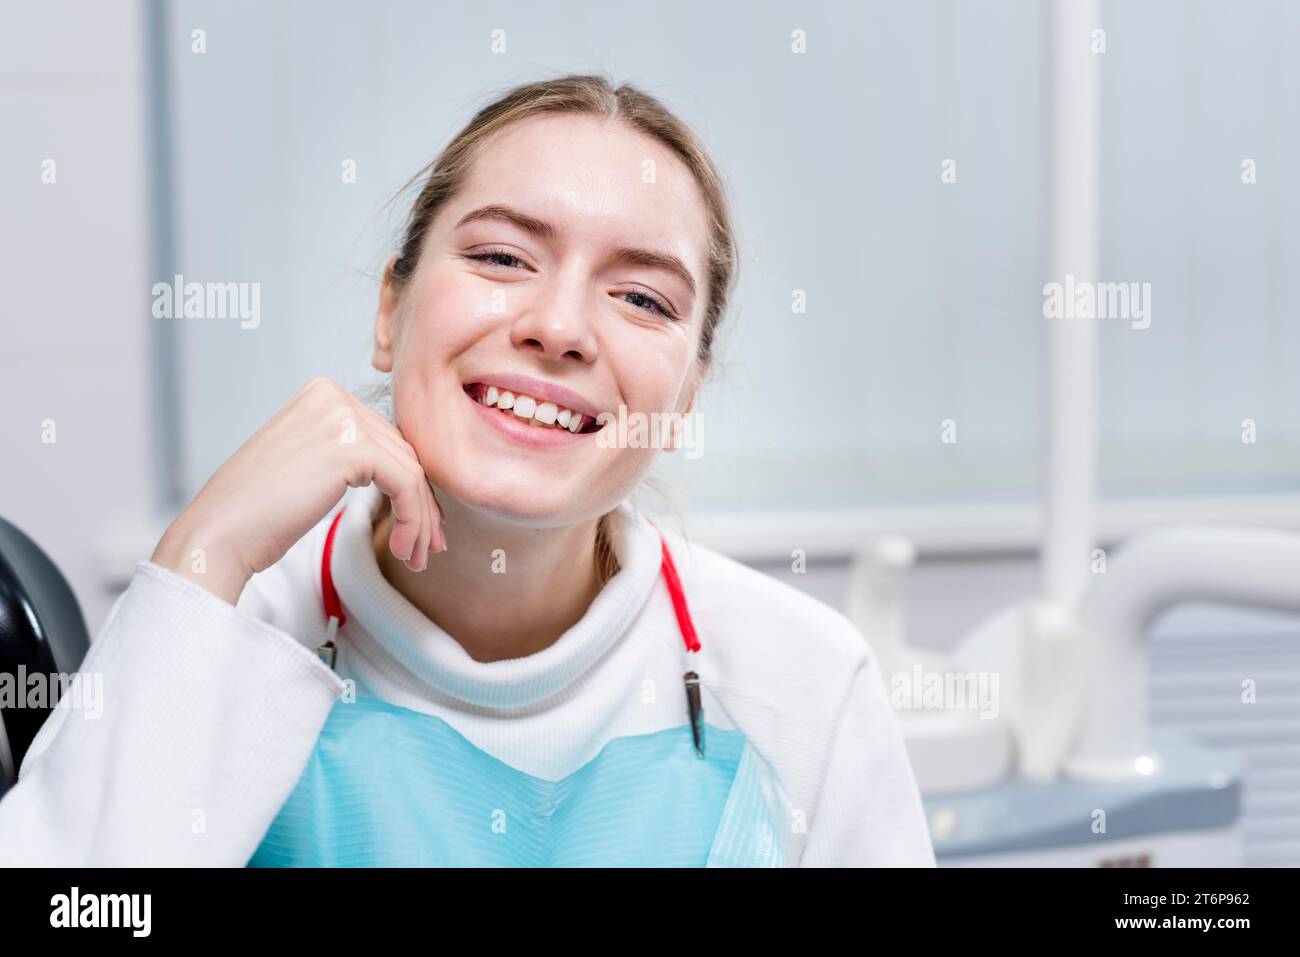 Portrait smiley adult woman dentist Stock Photo